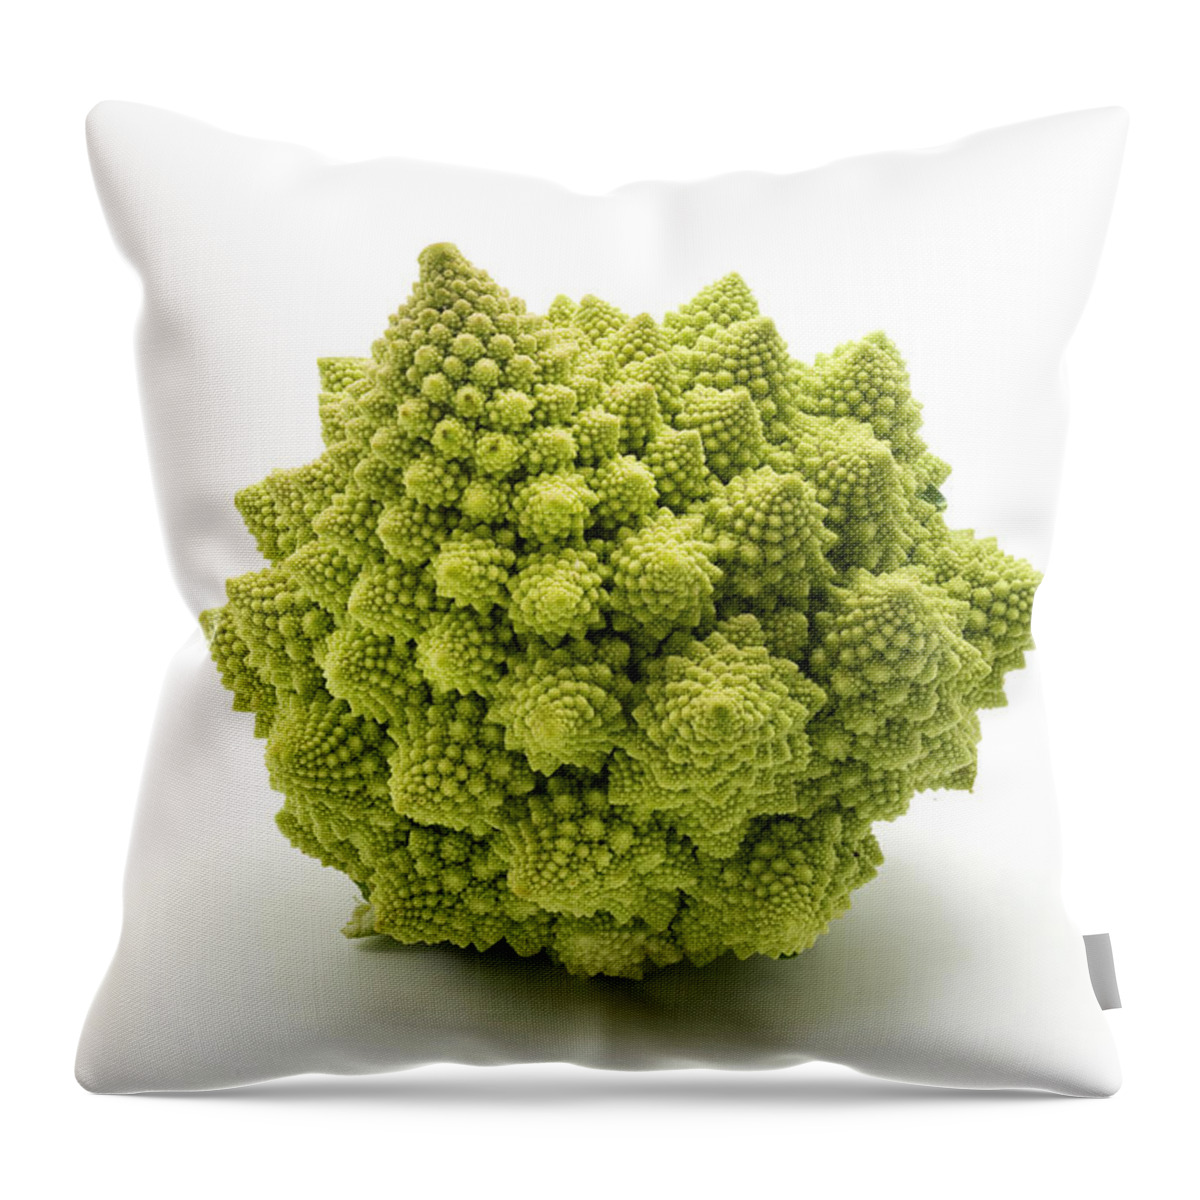 White Background Throw Pillow featuring the photograph Romanesco broccoli by Fabrizio Troiani